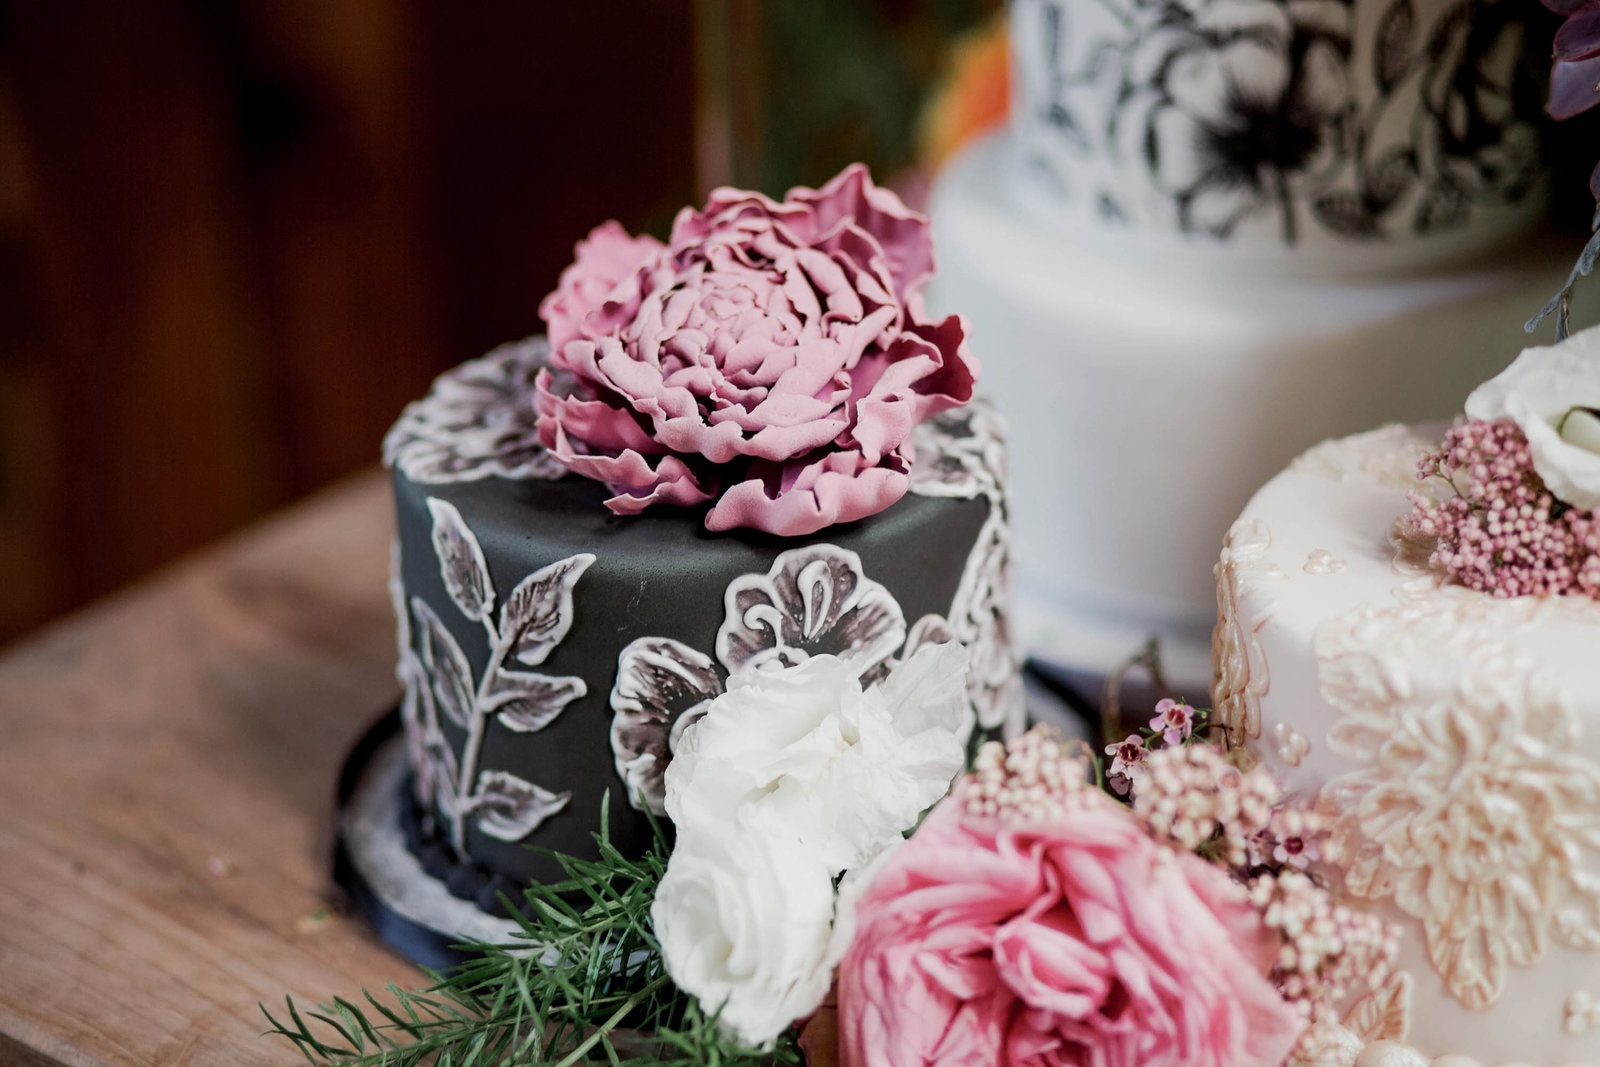 cake-spring-bridal-lookbook-fashion-editorial-glamour-grace-blog-published-rosa-clara-francesca-miranda-jenny-packham-mma-agency-kate-timbers304